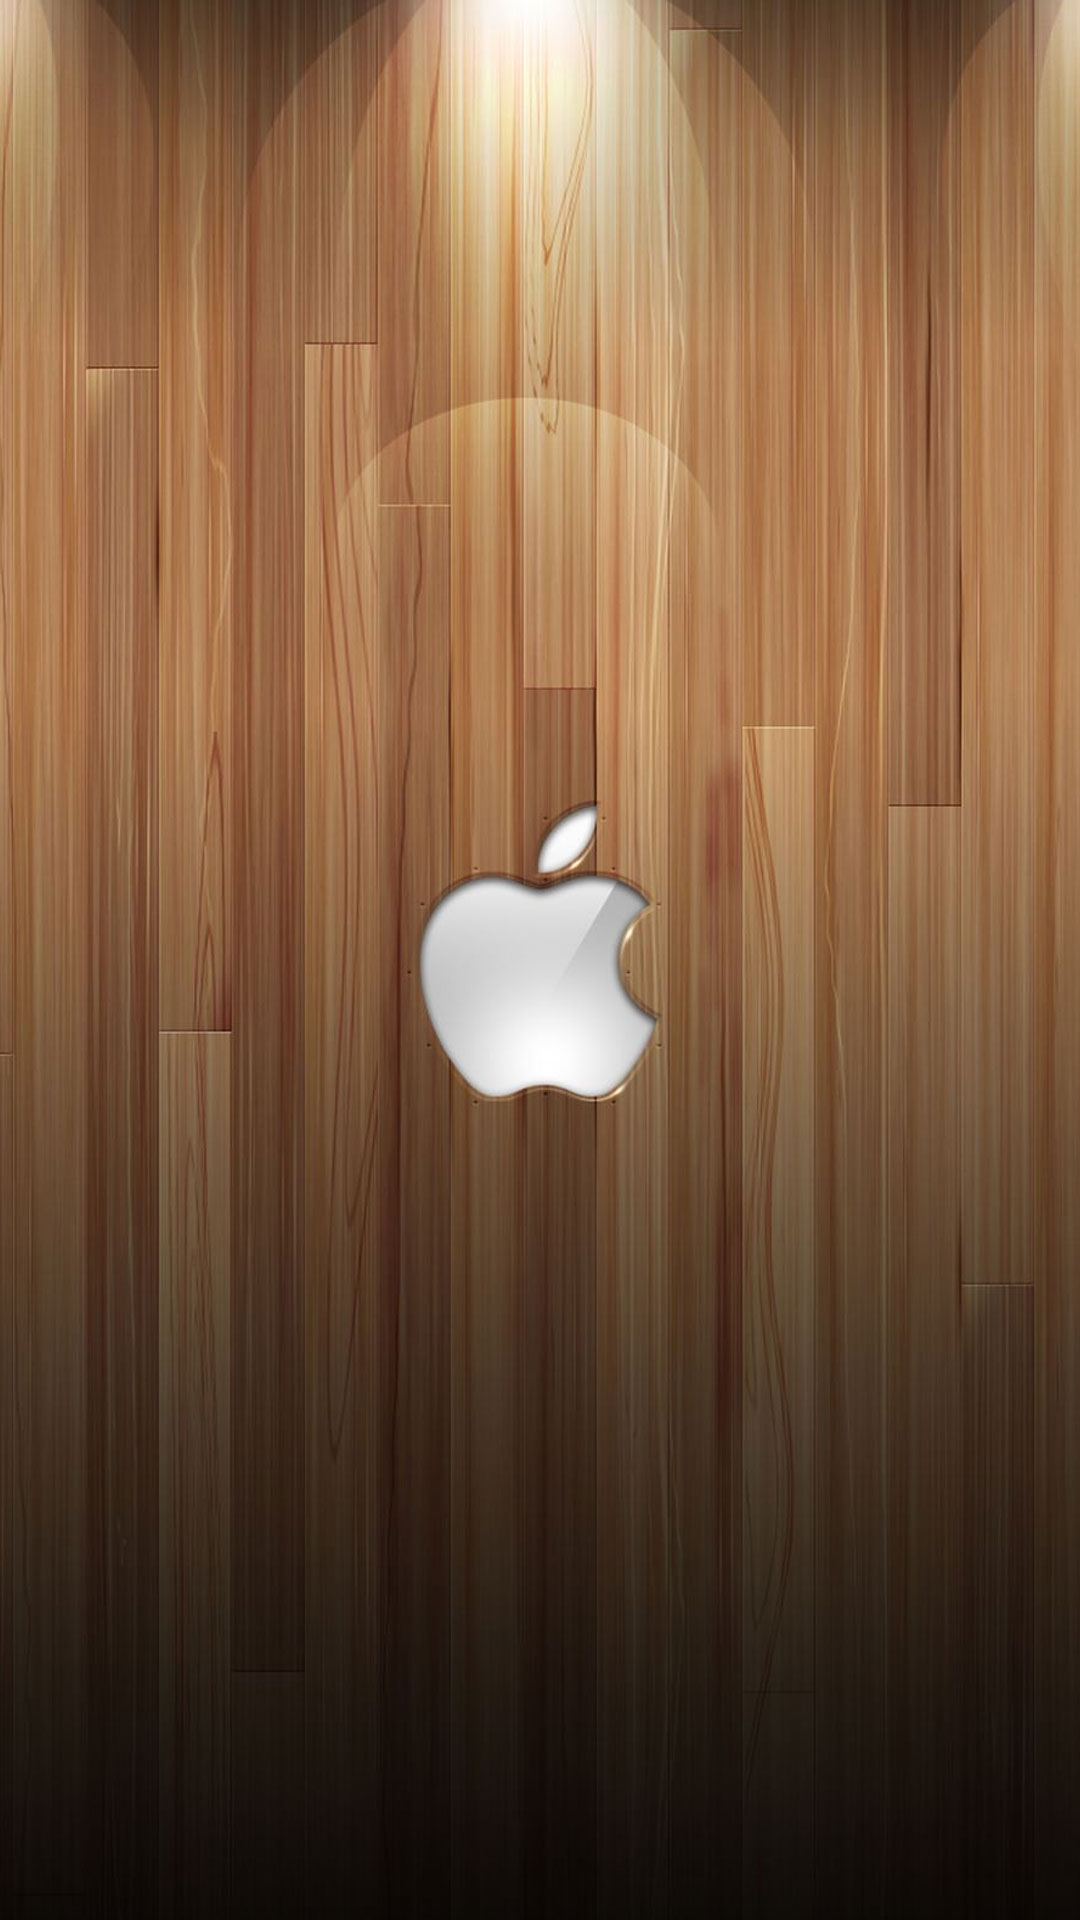 46 Apple 6 Plus Wallpapers On Wallpapersafari